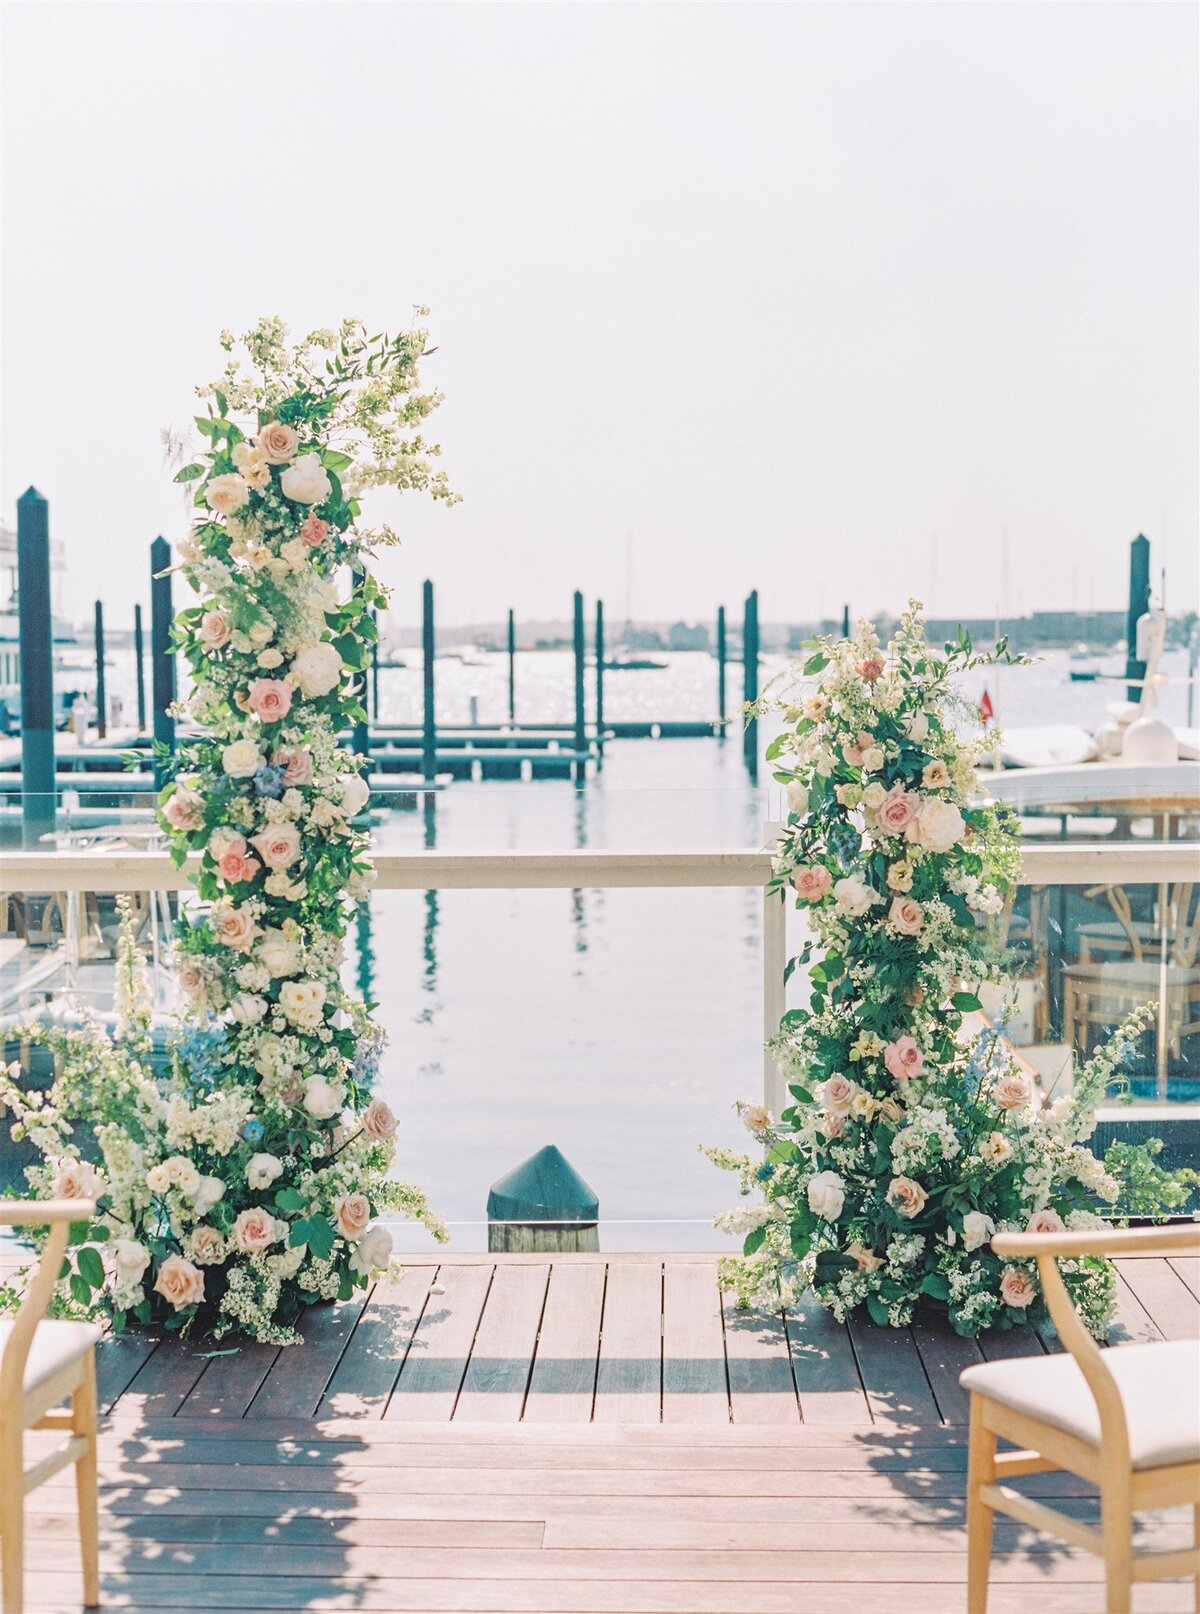 Kate-Murtaugh-Events-wedding-planner-Newport-ceremony-floral-arch-boat-dock-harbor